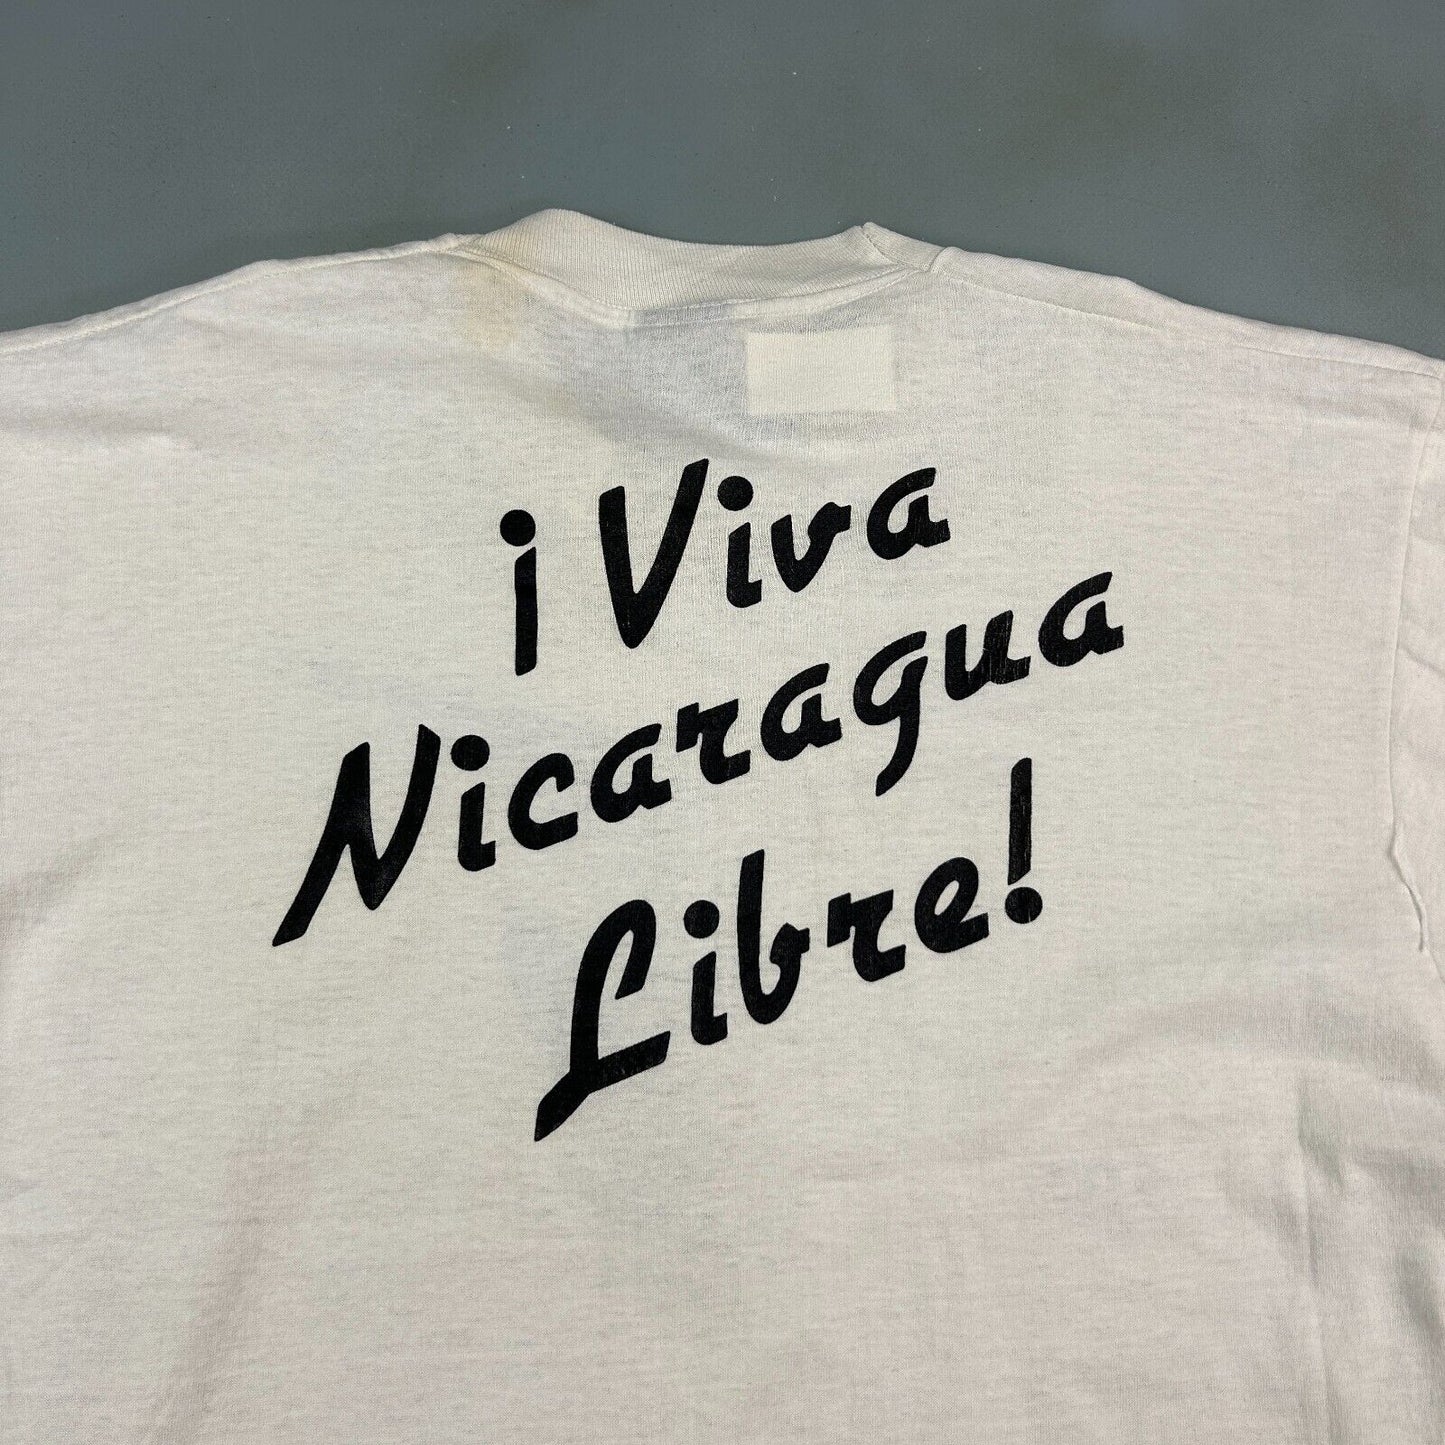 VINTAGE 80s | Sandino Viva Nicaragua Libre Distressed White T-Shirt sz L Adult